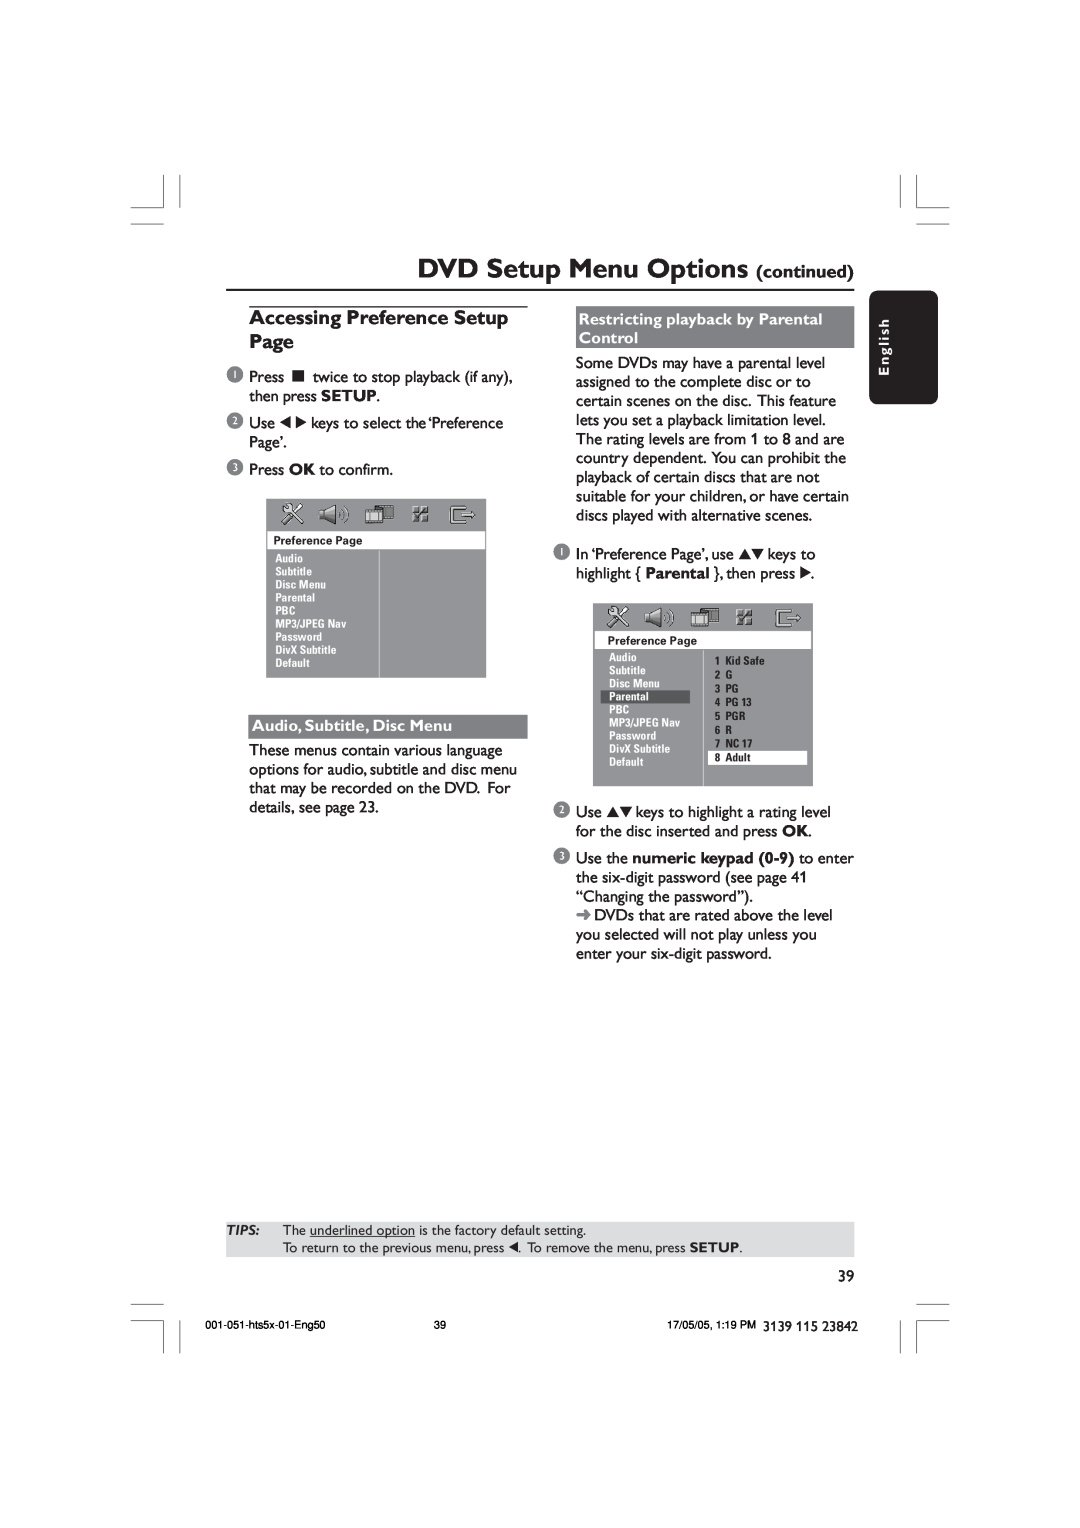 Philips HTS5000W user manual Accessing Preference Setup Page, DVD Setup Menu Options continued, Audio, Subtitle, Disc Menu 